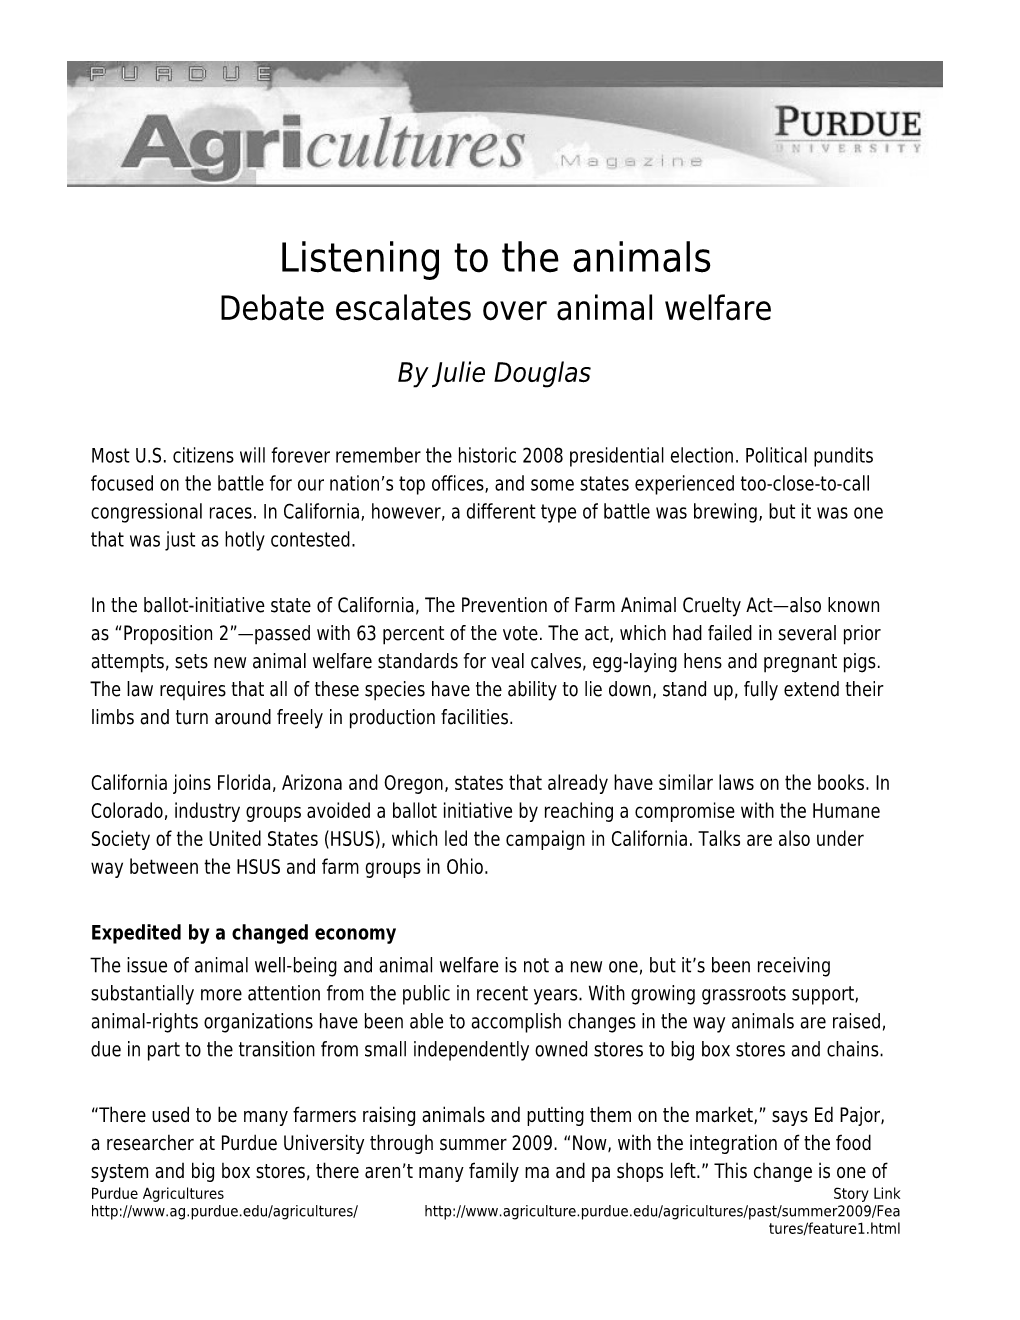 Listening to the Animals Debate Escalates Over Animal Welfare